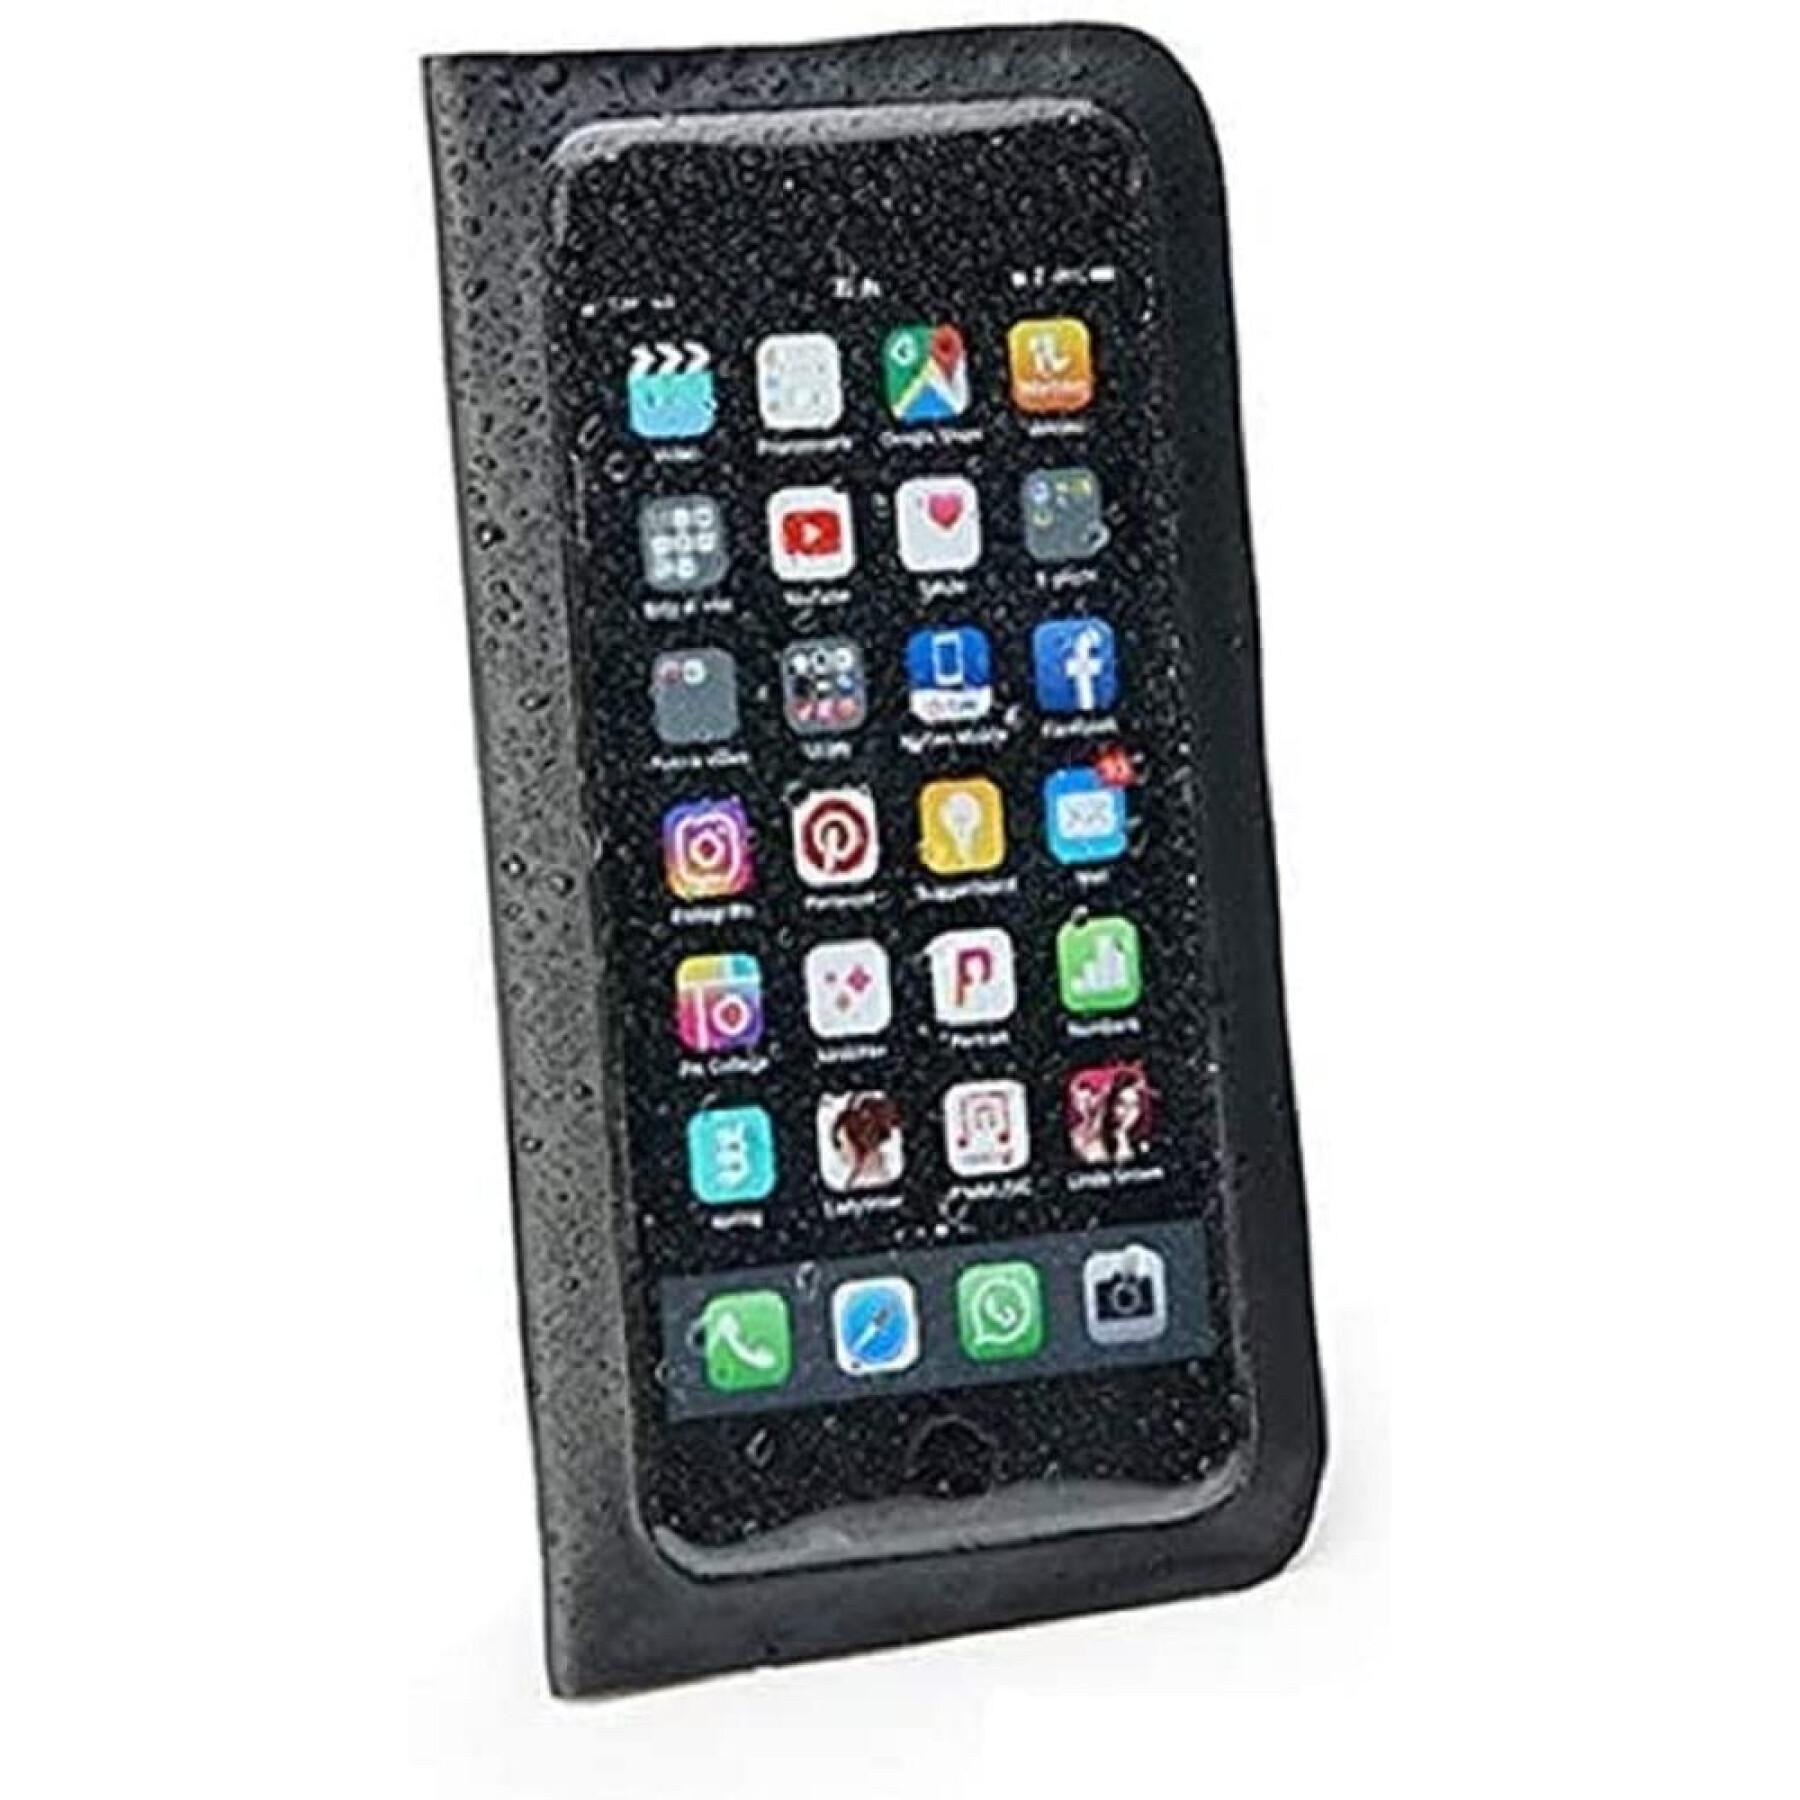 waterproof smartphone case t519l Givi